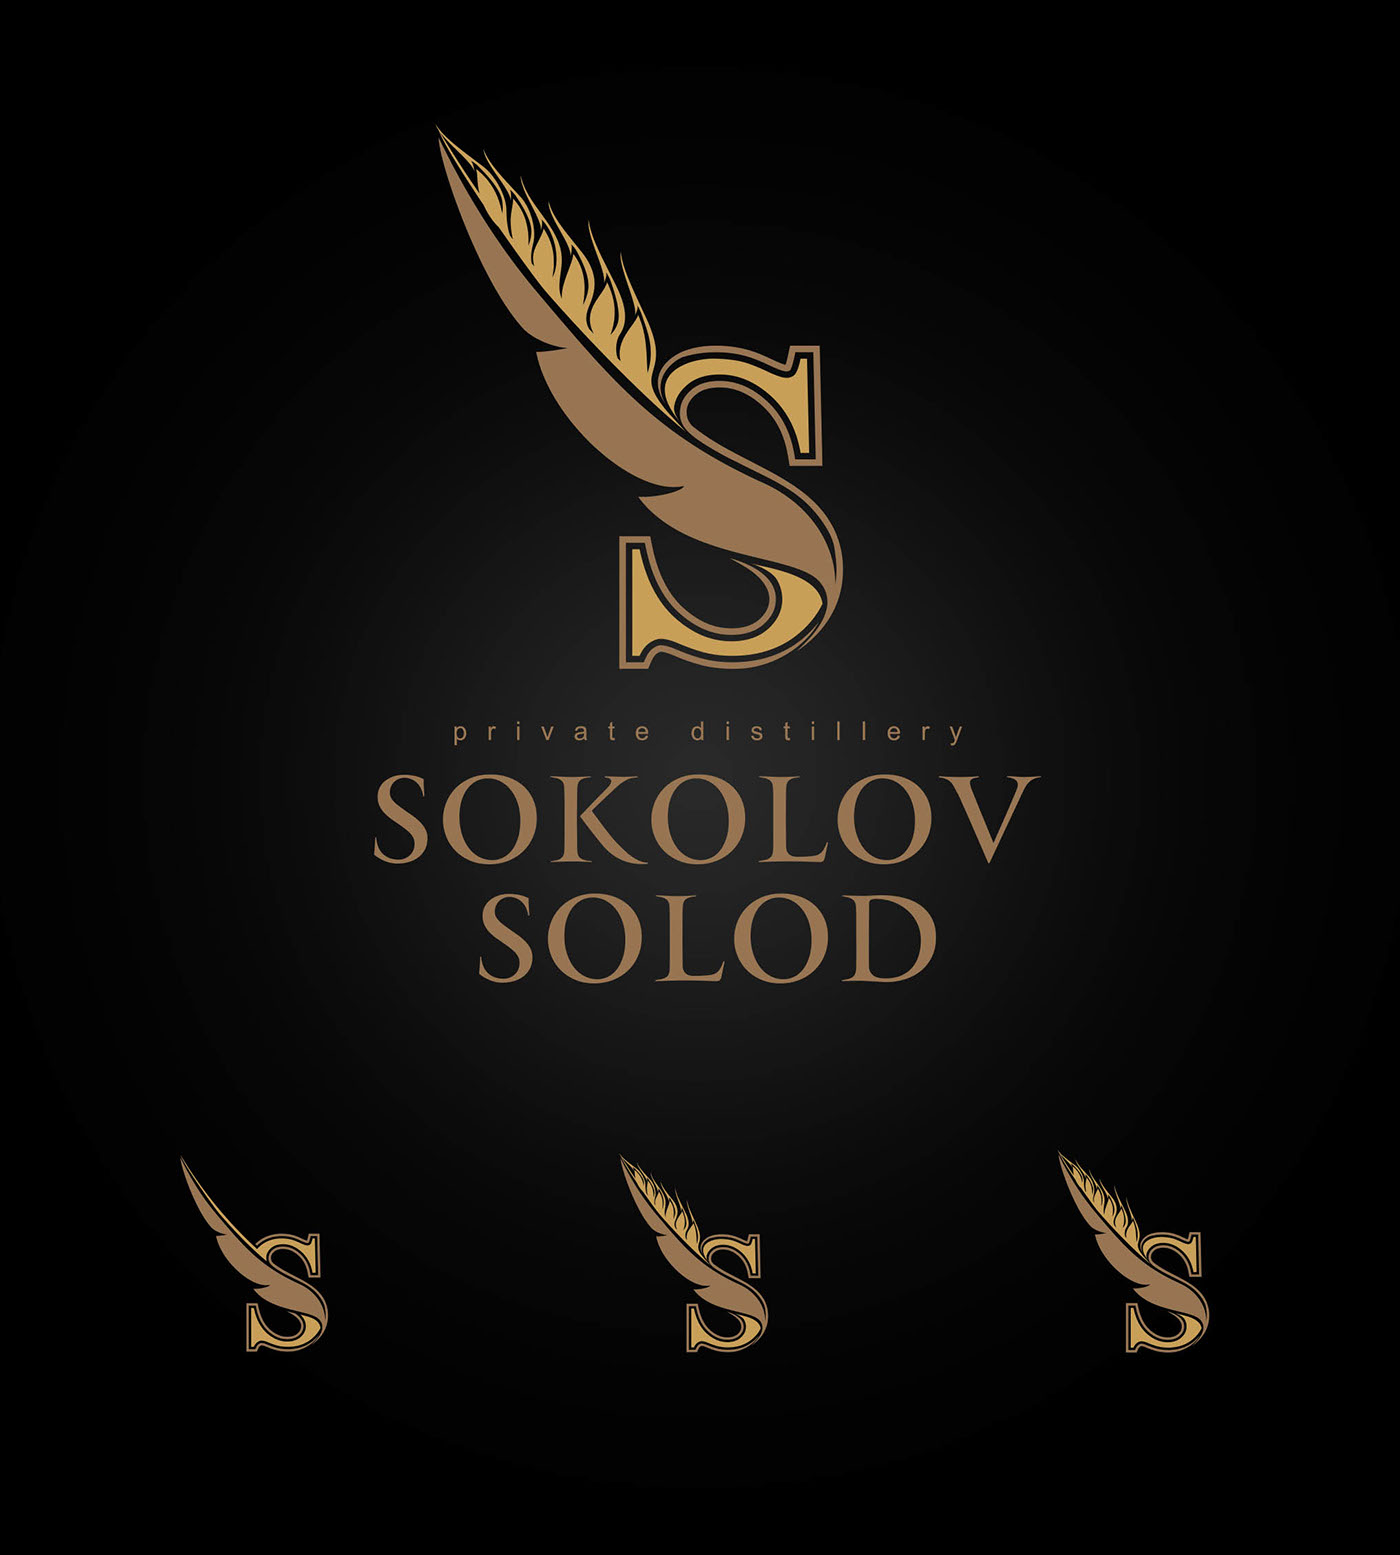 #whiskey sokolov bottle logo виски дизайн упаковки нейминг